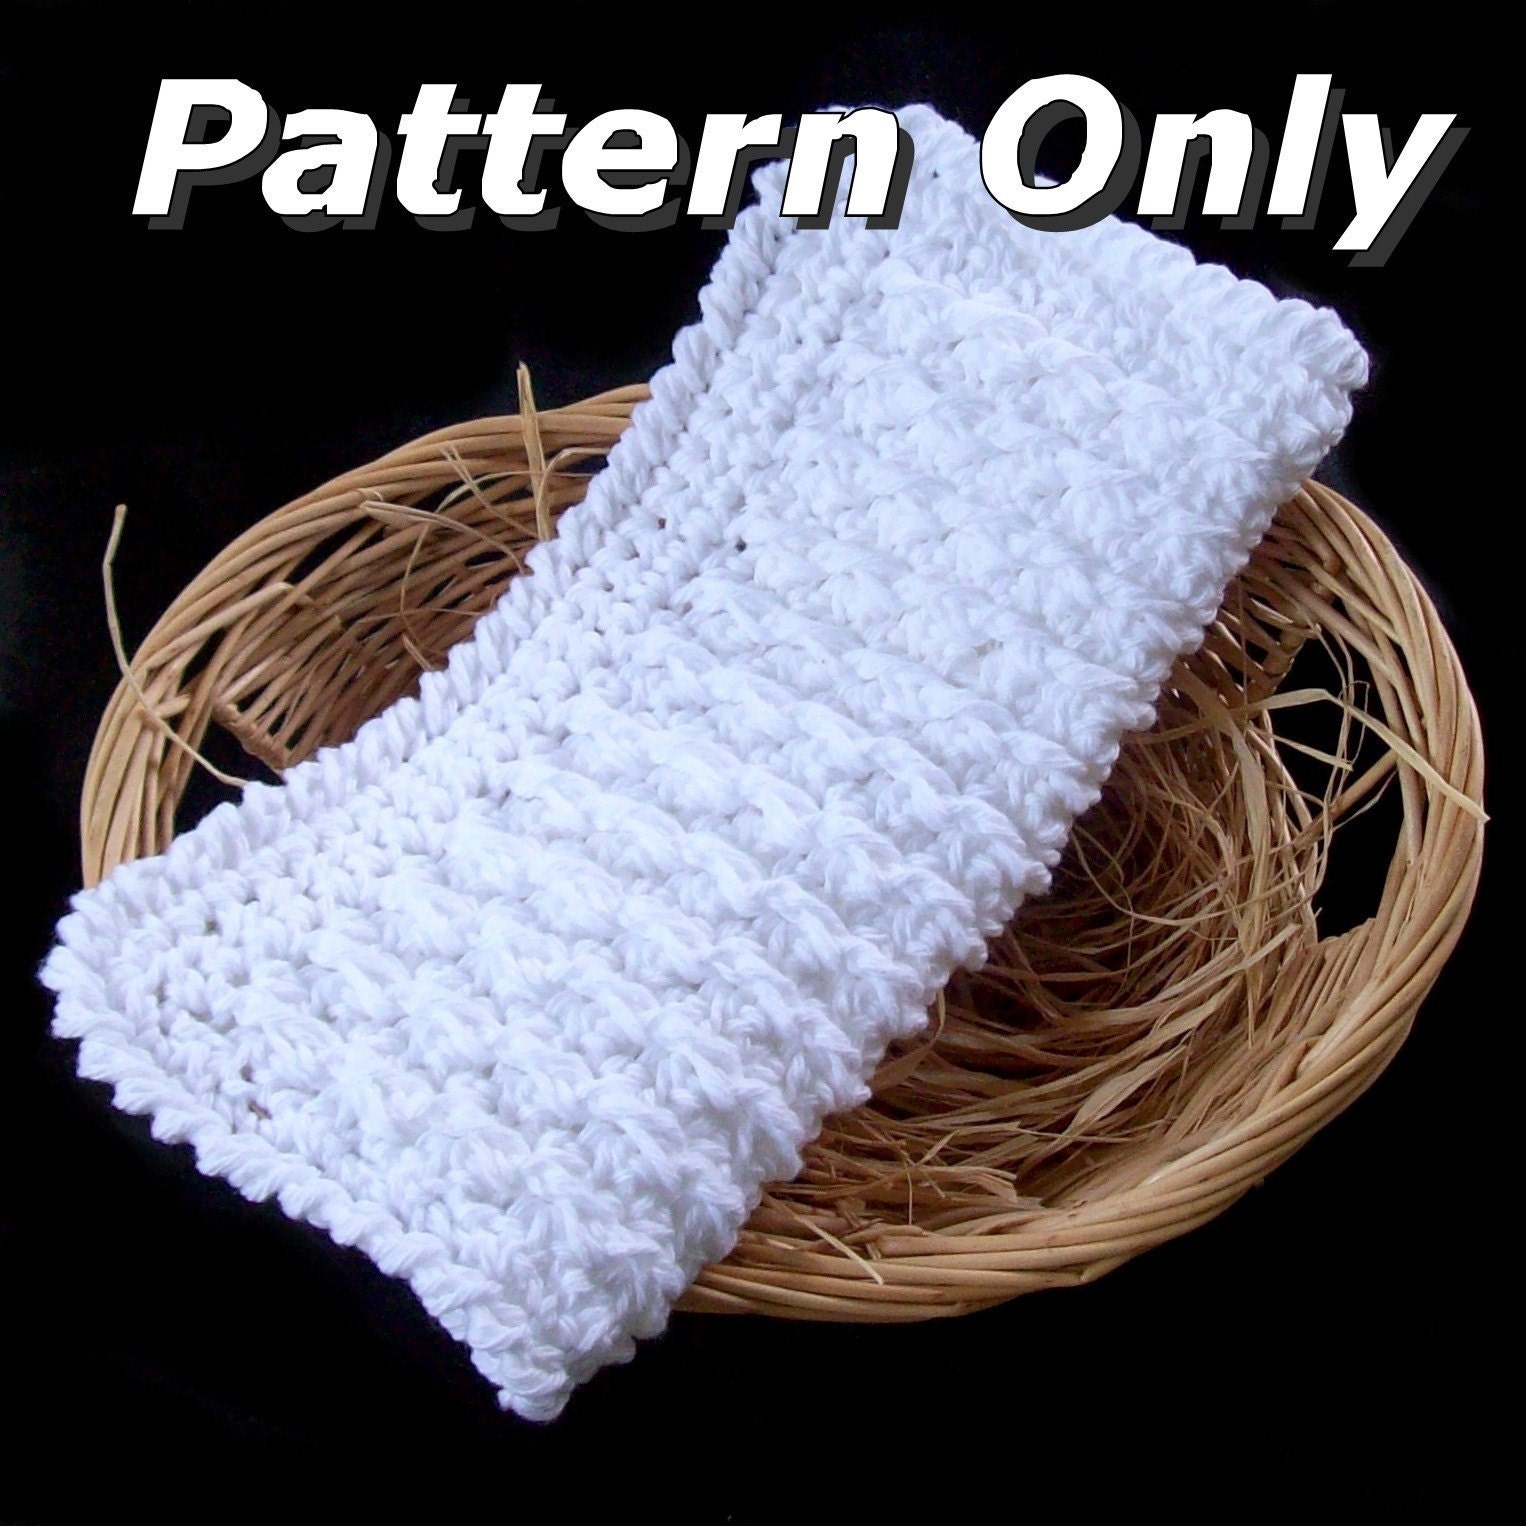 Colorful Crochet Dishcloth Pattern - Free Crochet Pattern for a